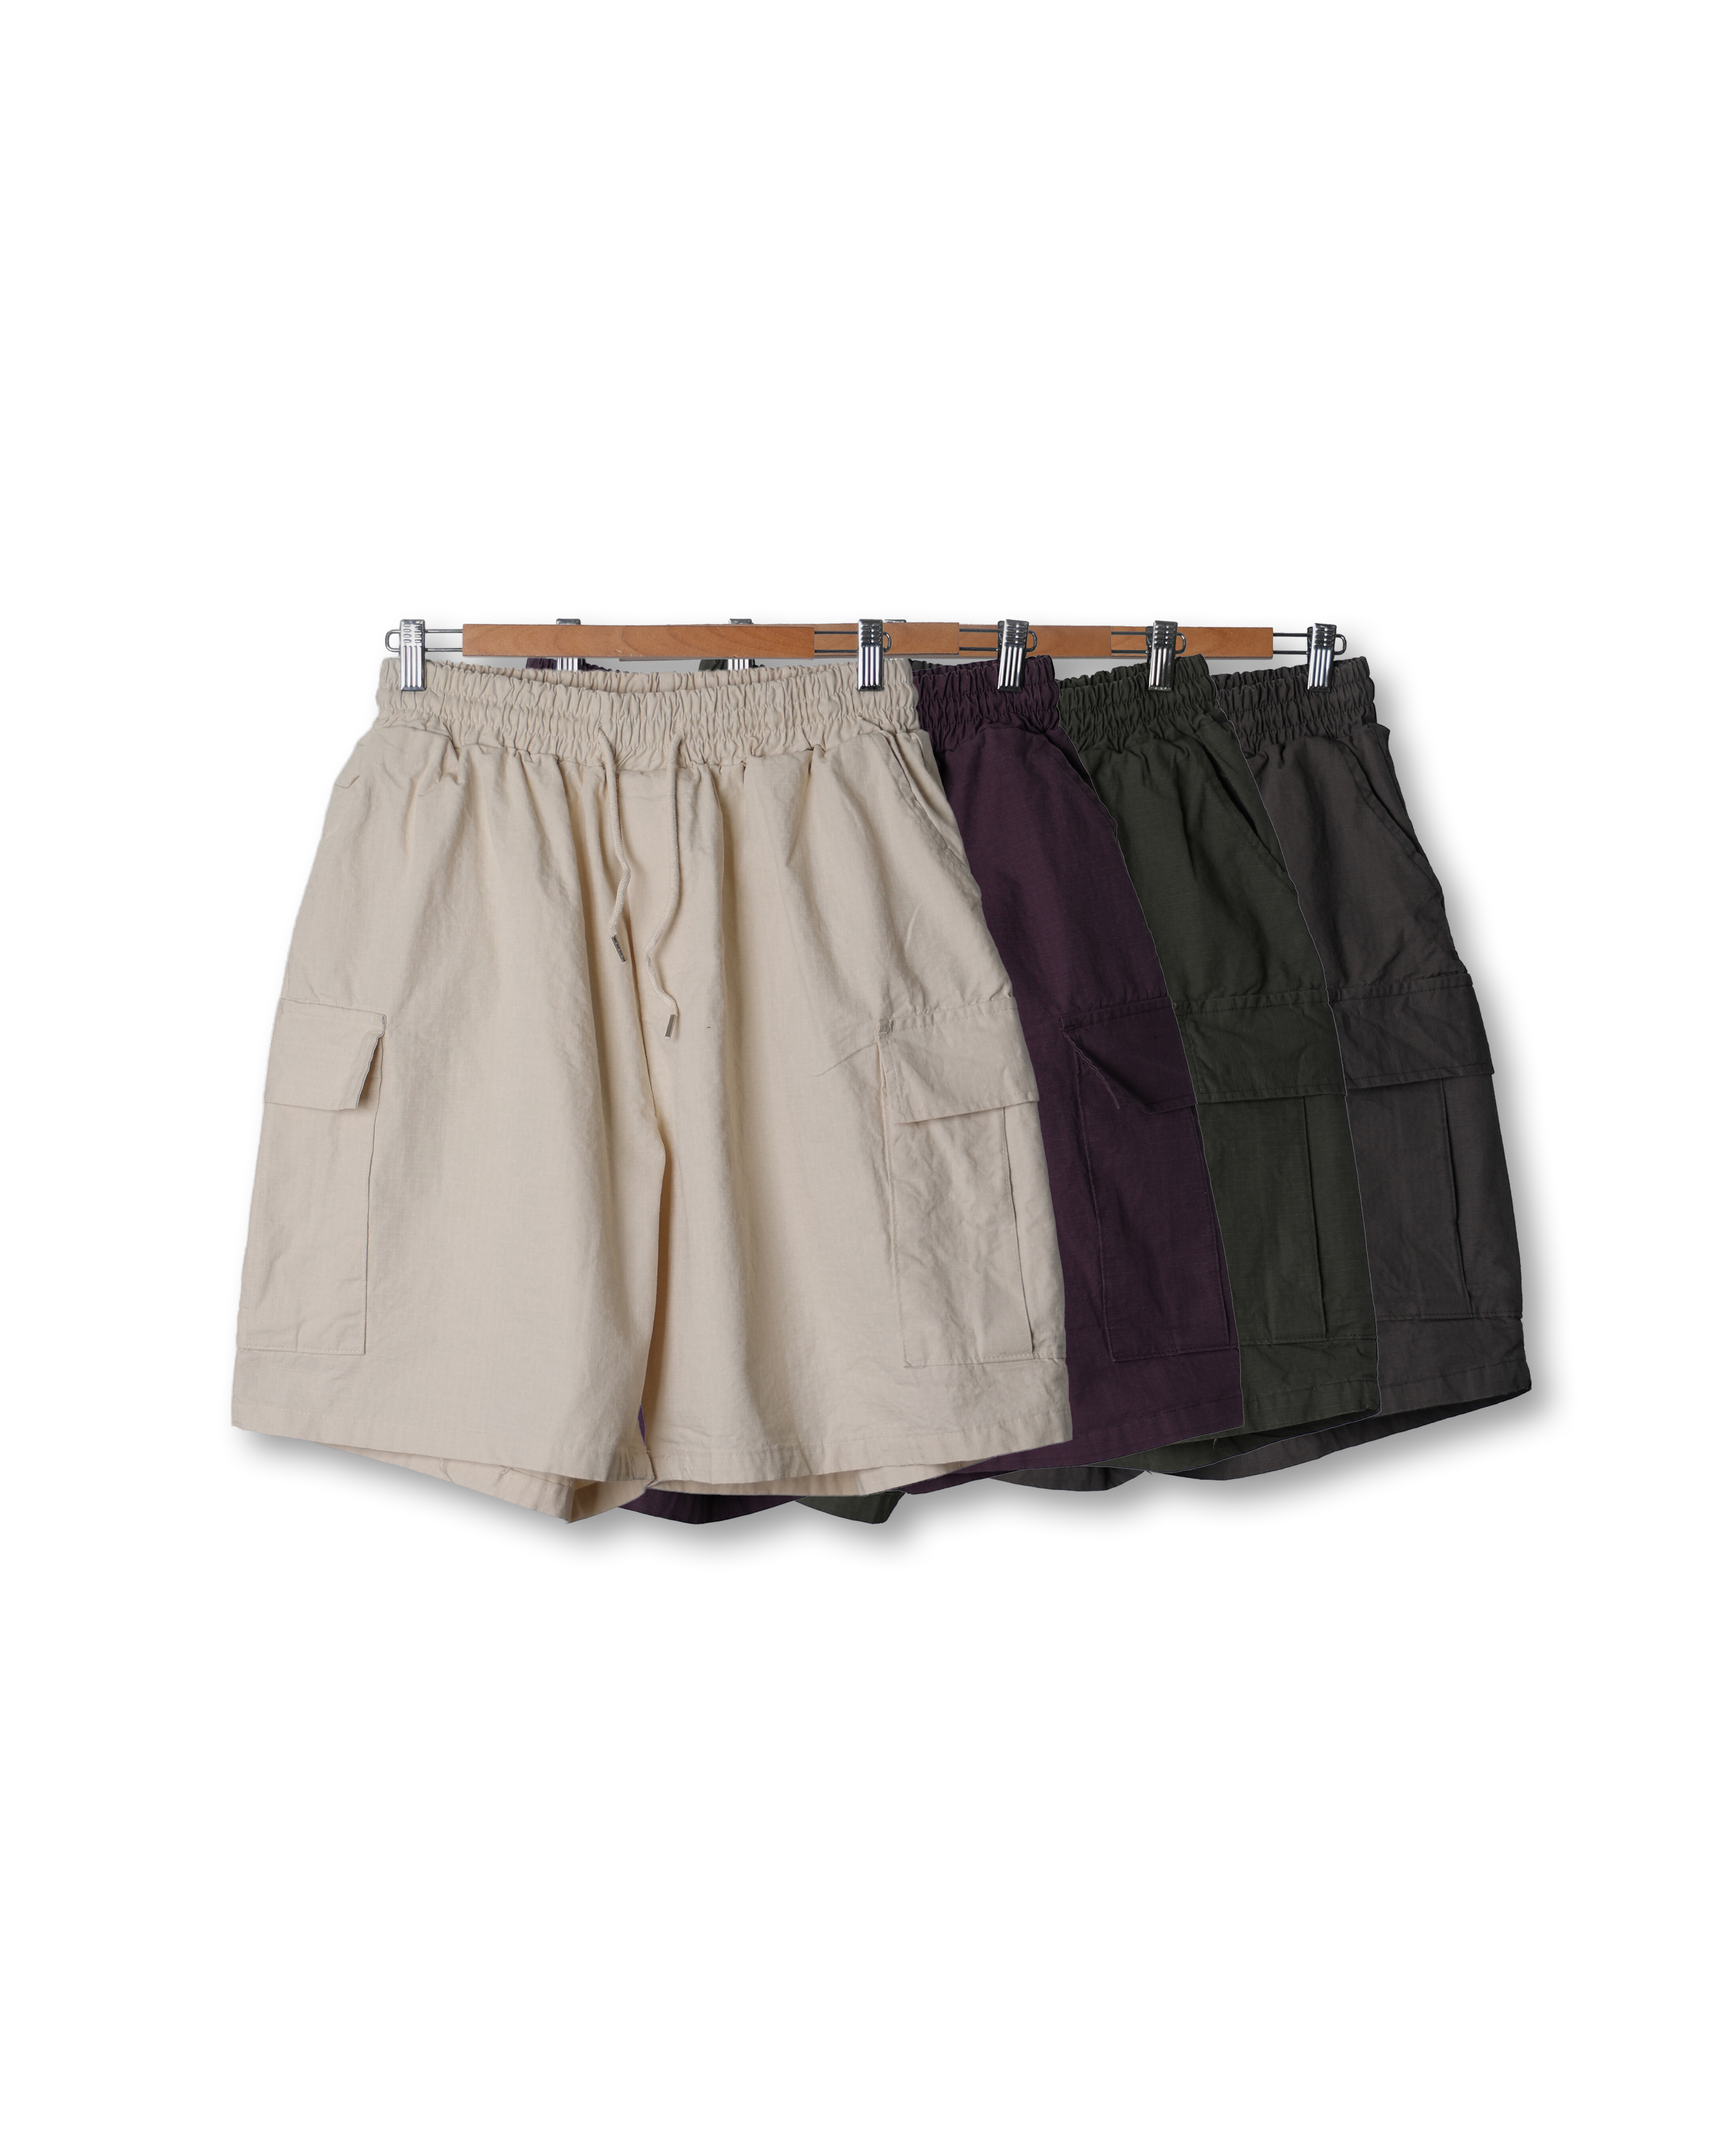 RAM KONA Ripstop Cargo Bermuda Pants (Charcoal/Olive/Purple/Beige)